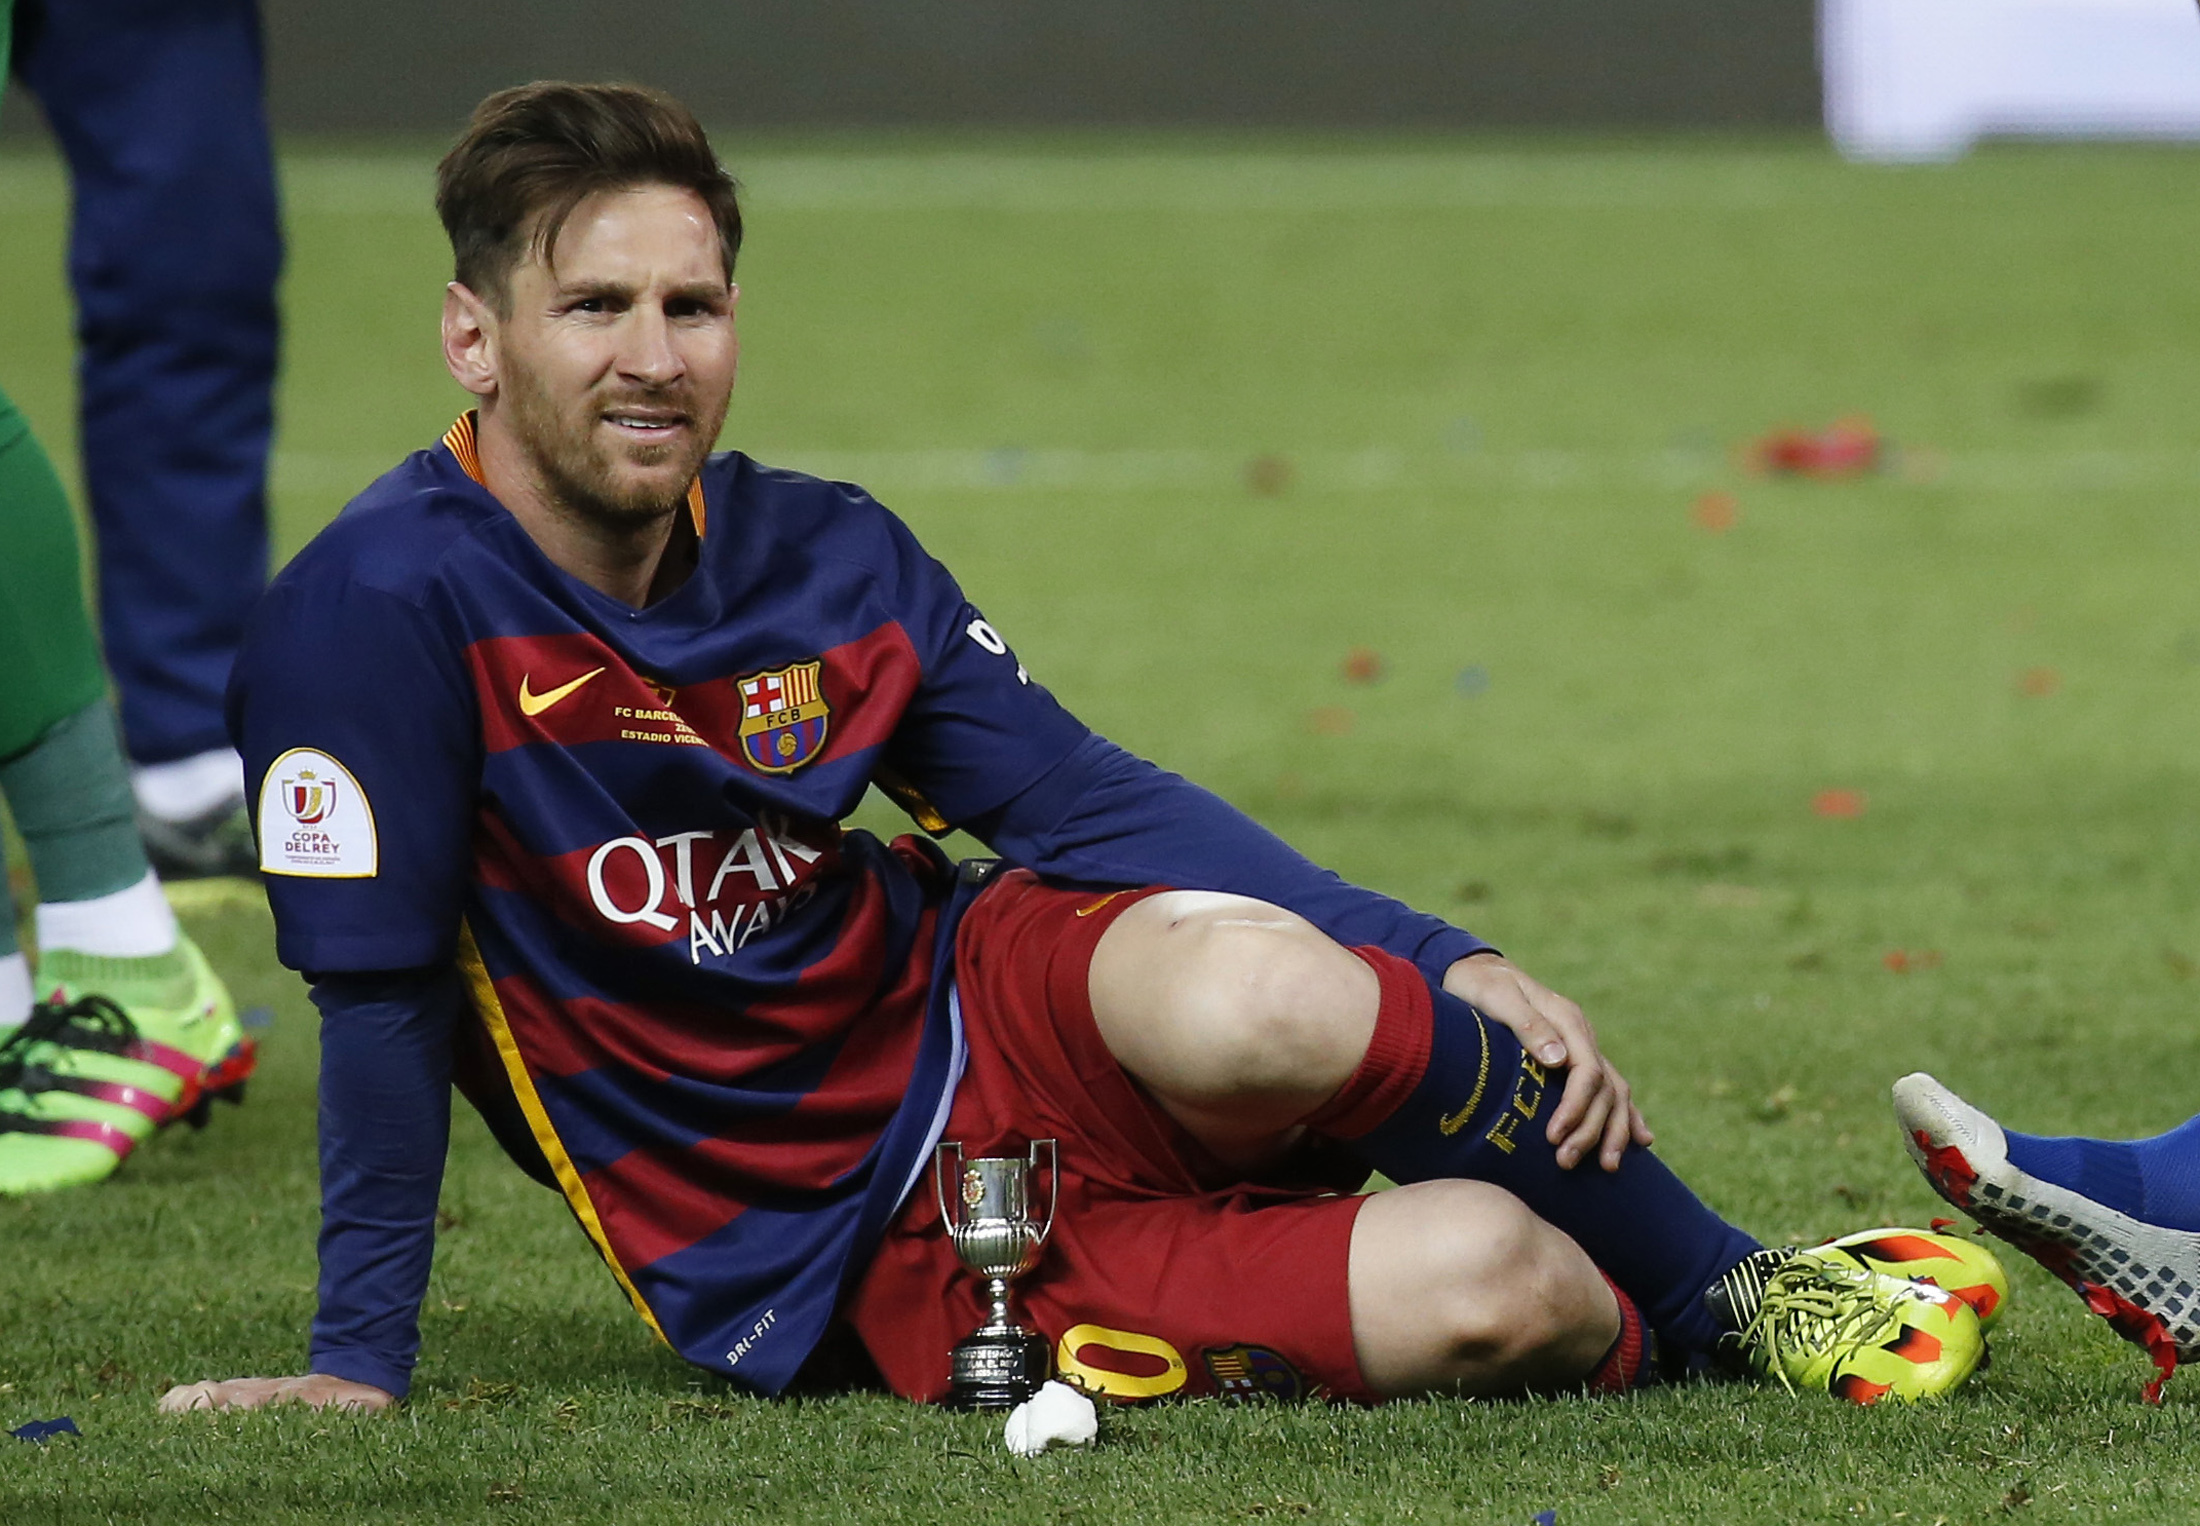 Presidente del Barcelona: Tarde o temprano firmaremos el contrato con Messi